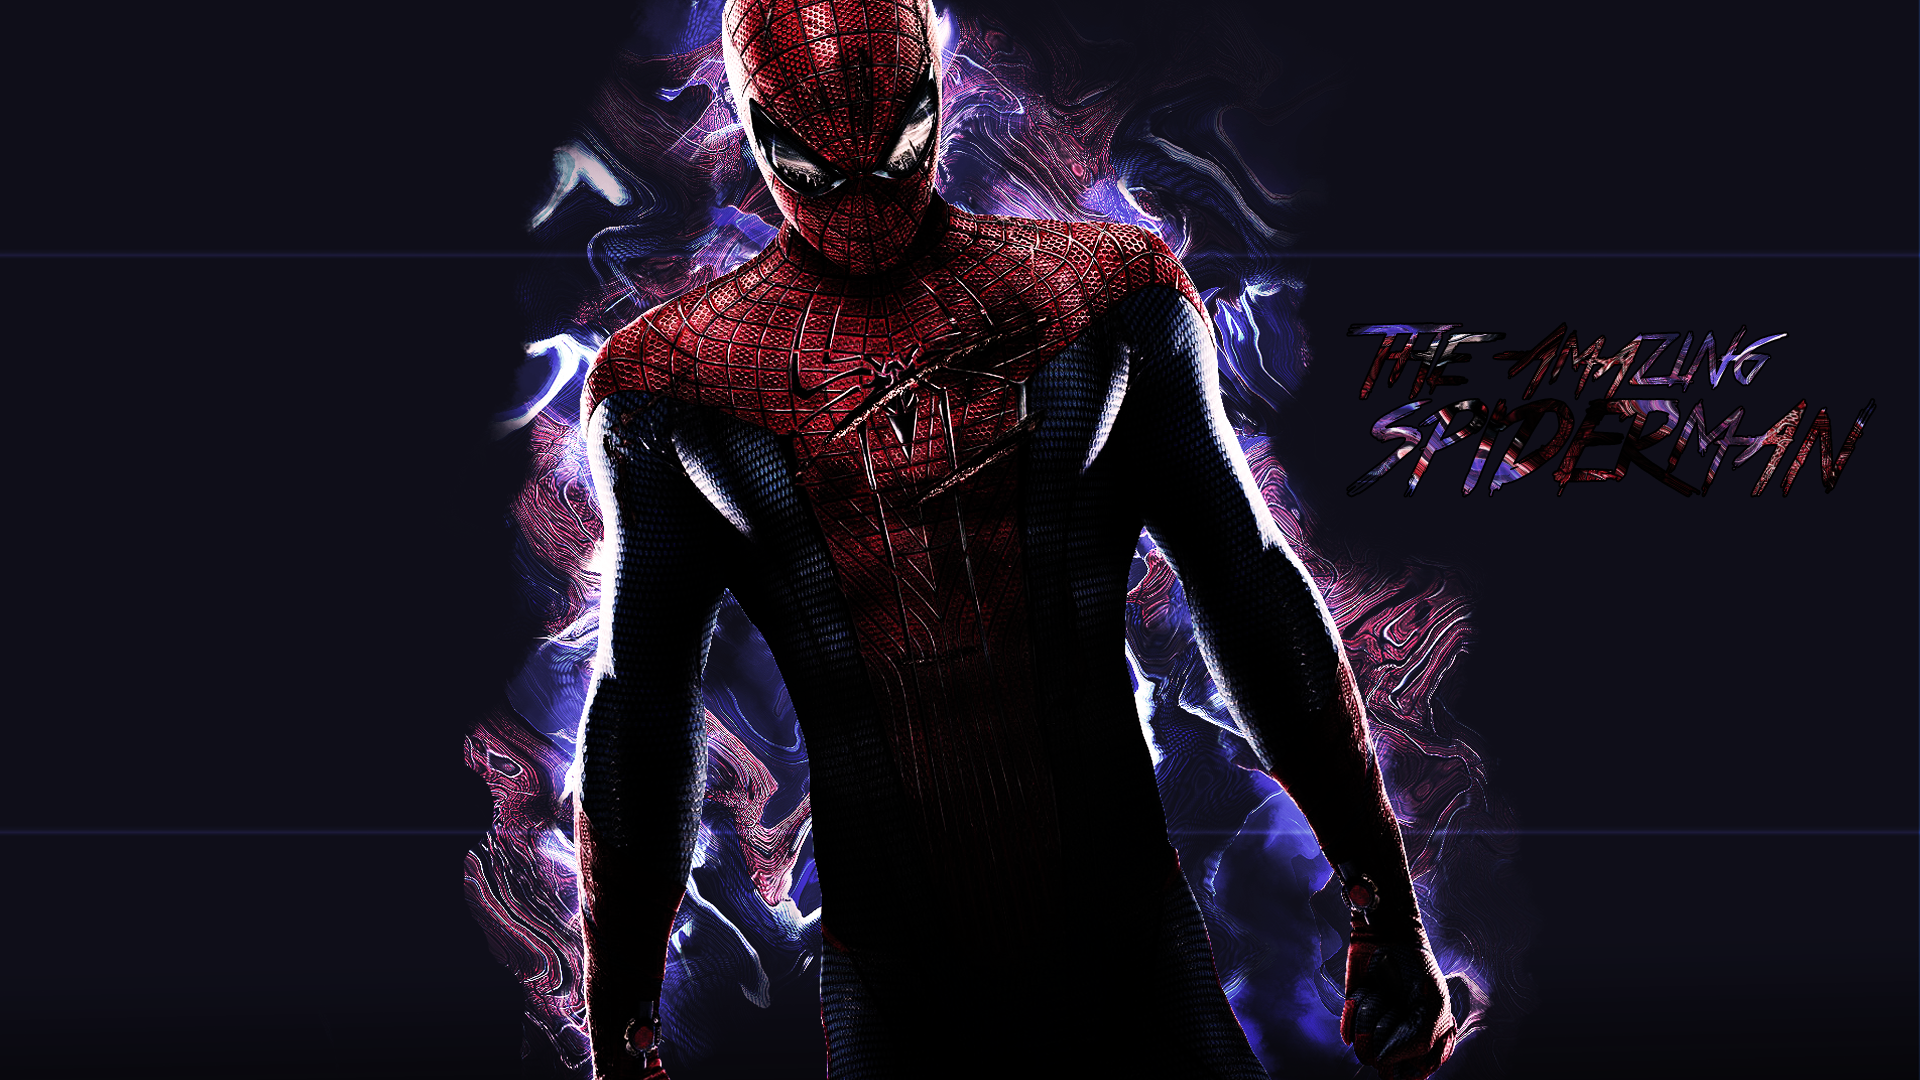 The Amazing Spider Man Wallpaper HD. Spider Man Laptop Wallpaper, Spider Man Phone Wallpaper And Spider Man Cartoon Wallpaper